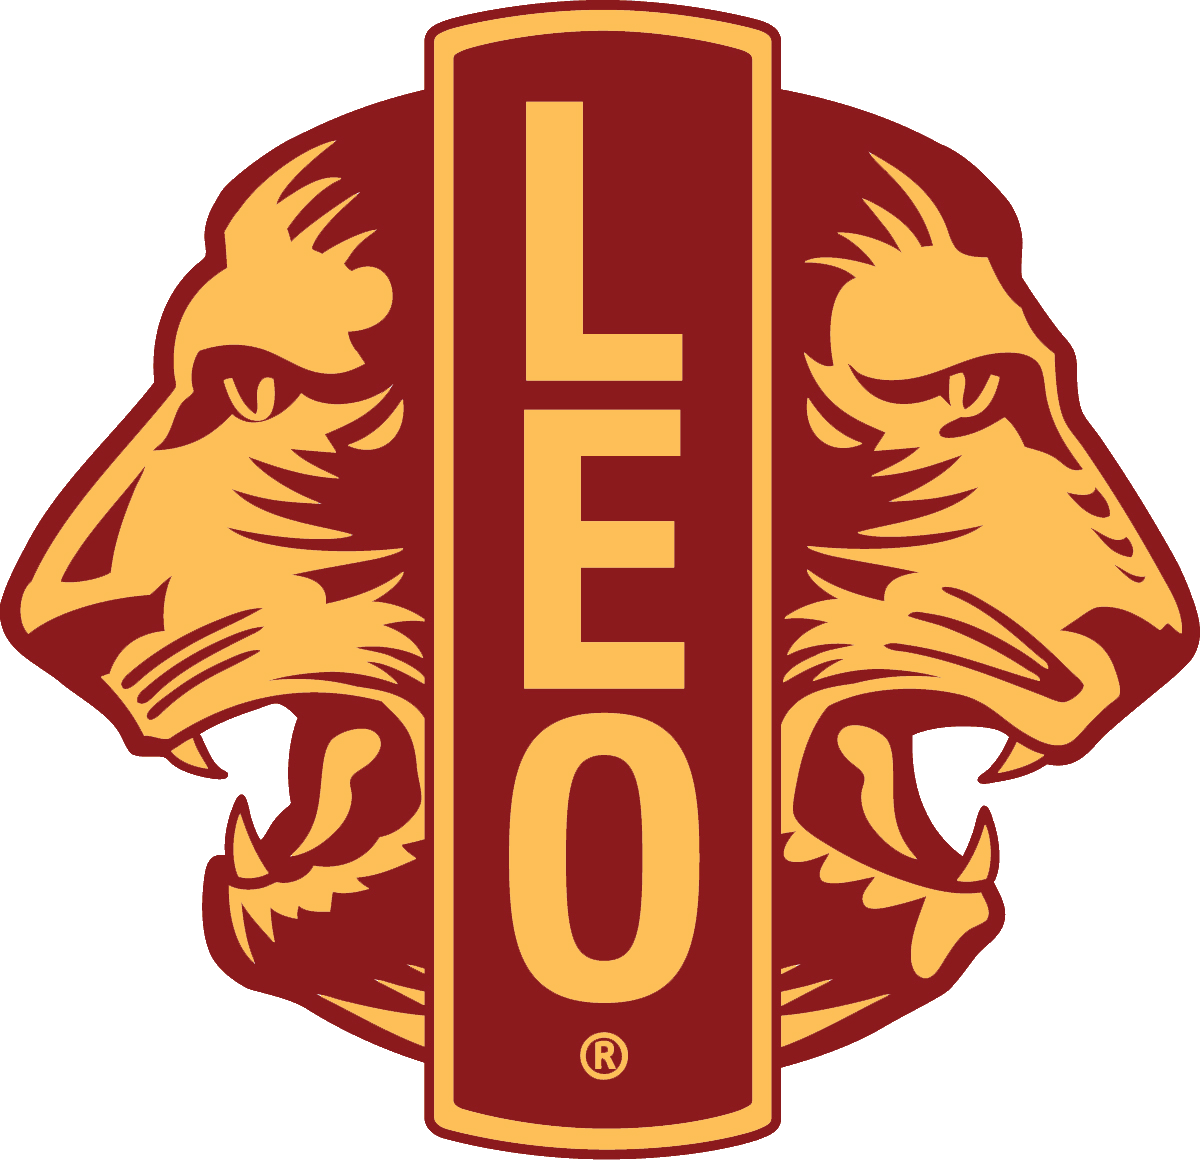 Clubs Logo - The Leo Club of Ambalangoda Diamond Stars: Leo Clubs Logo